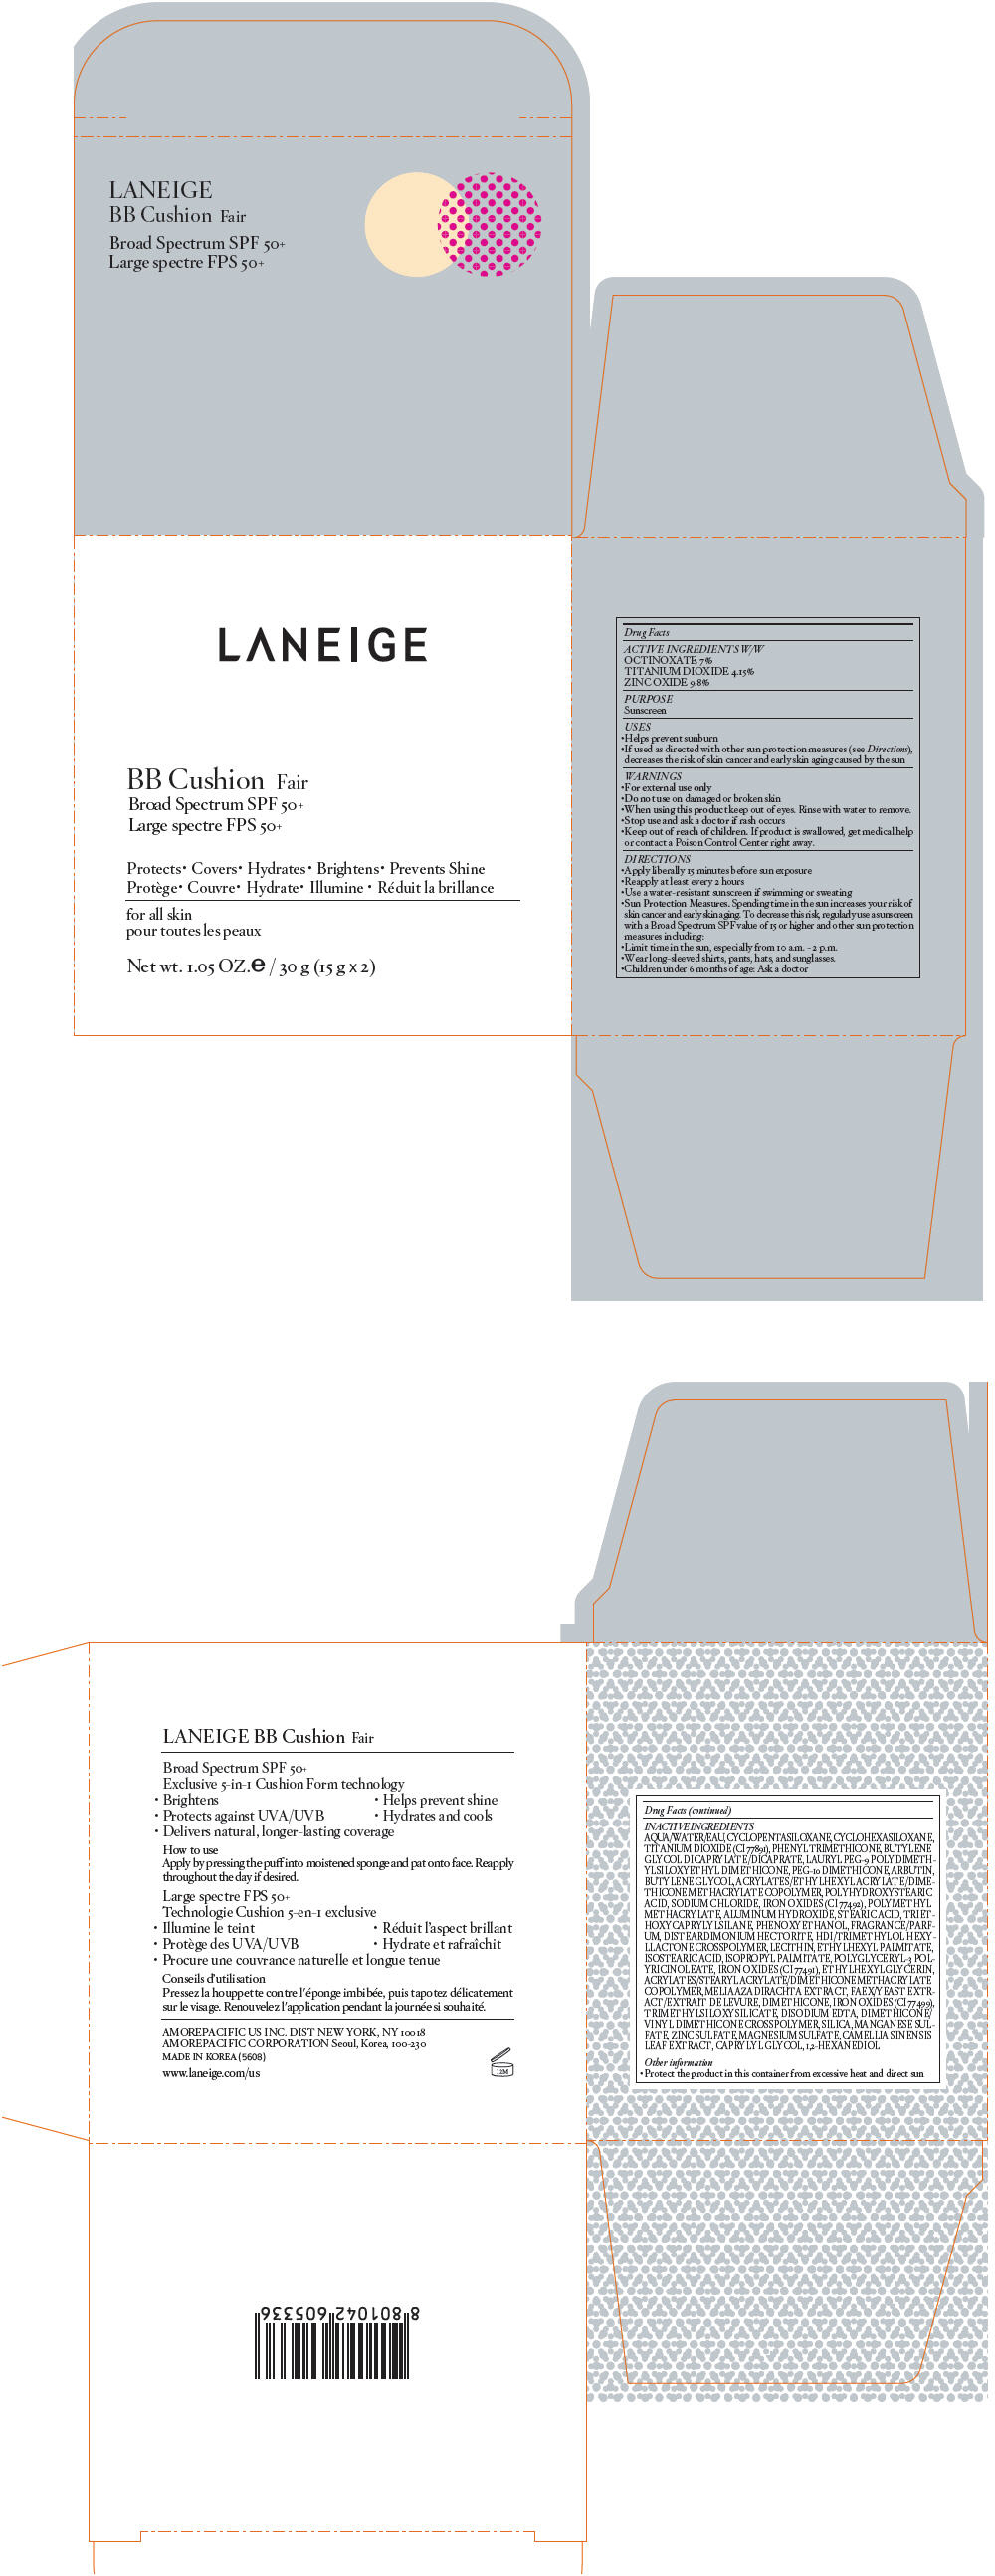 PRINCIPAL DISPLAY PANEL - 15 g x 2 Container Carton - Fair